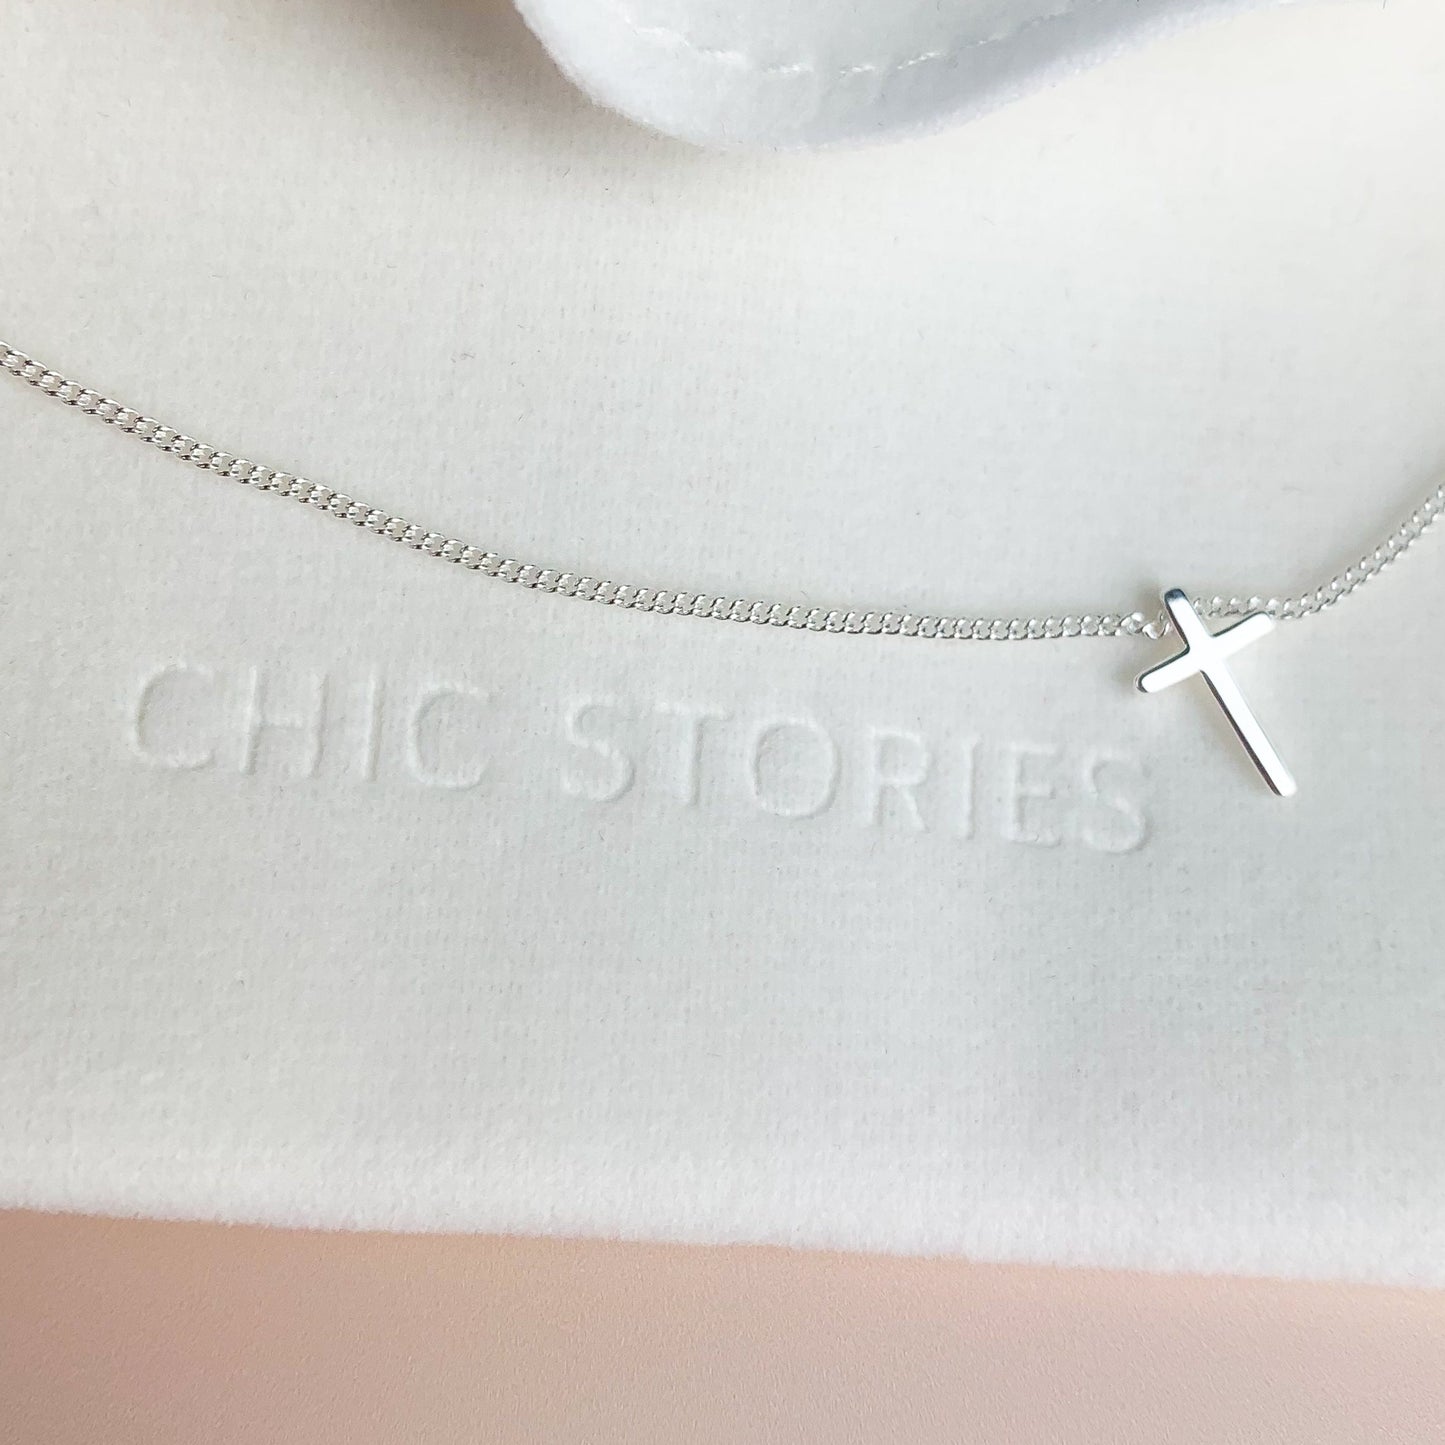 Minimalist Cross Pendant Necklace